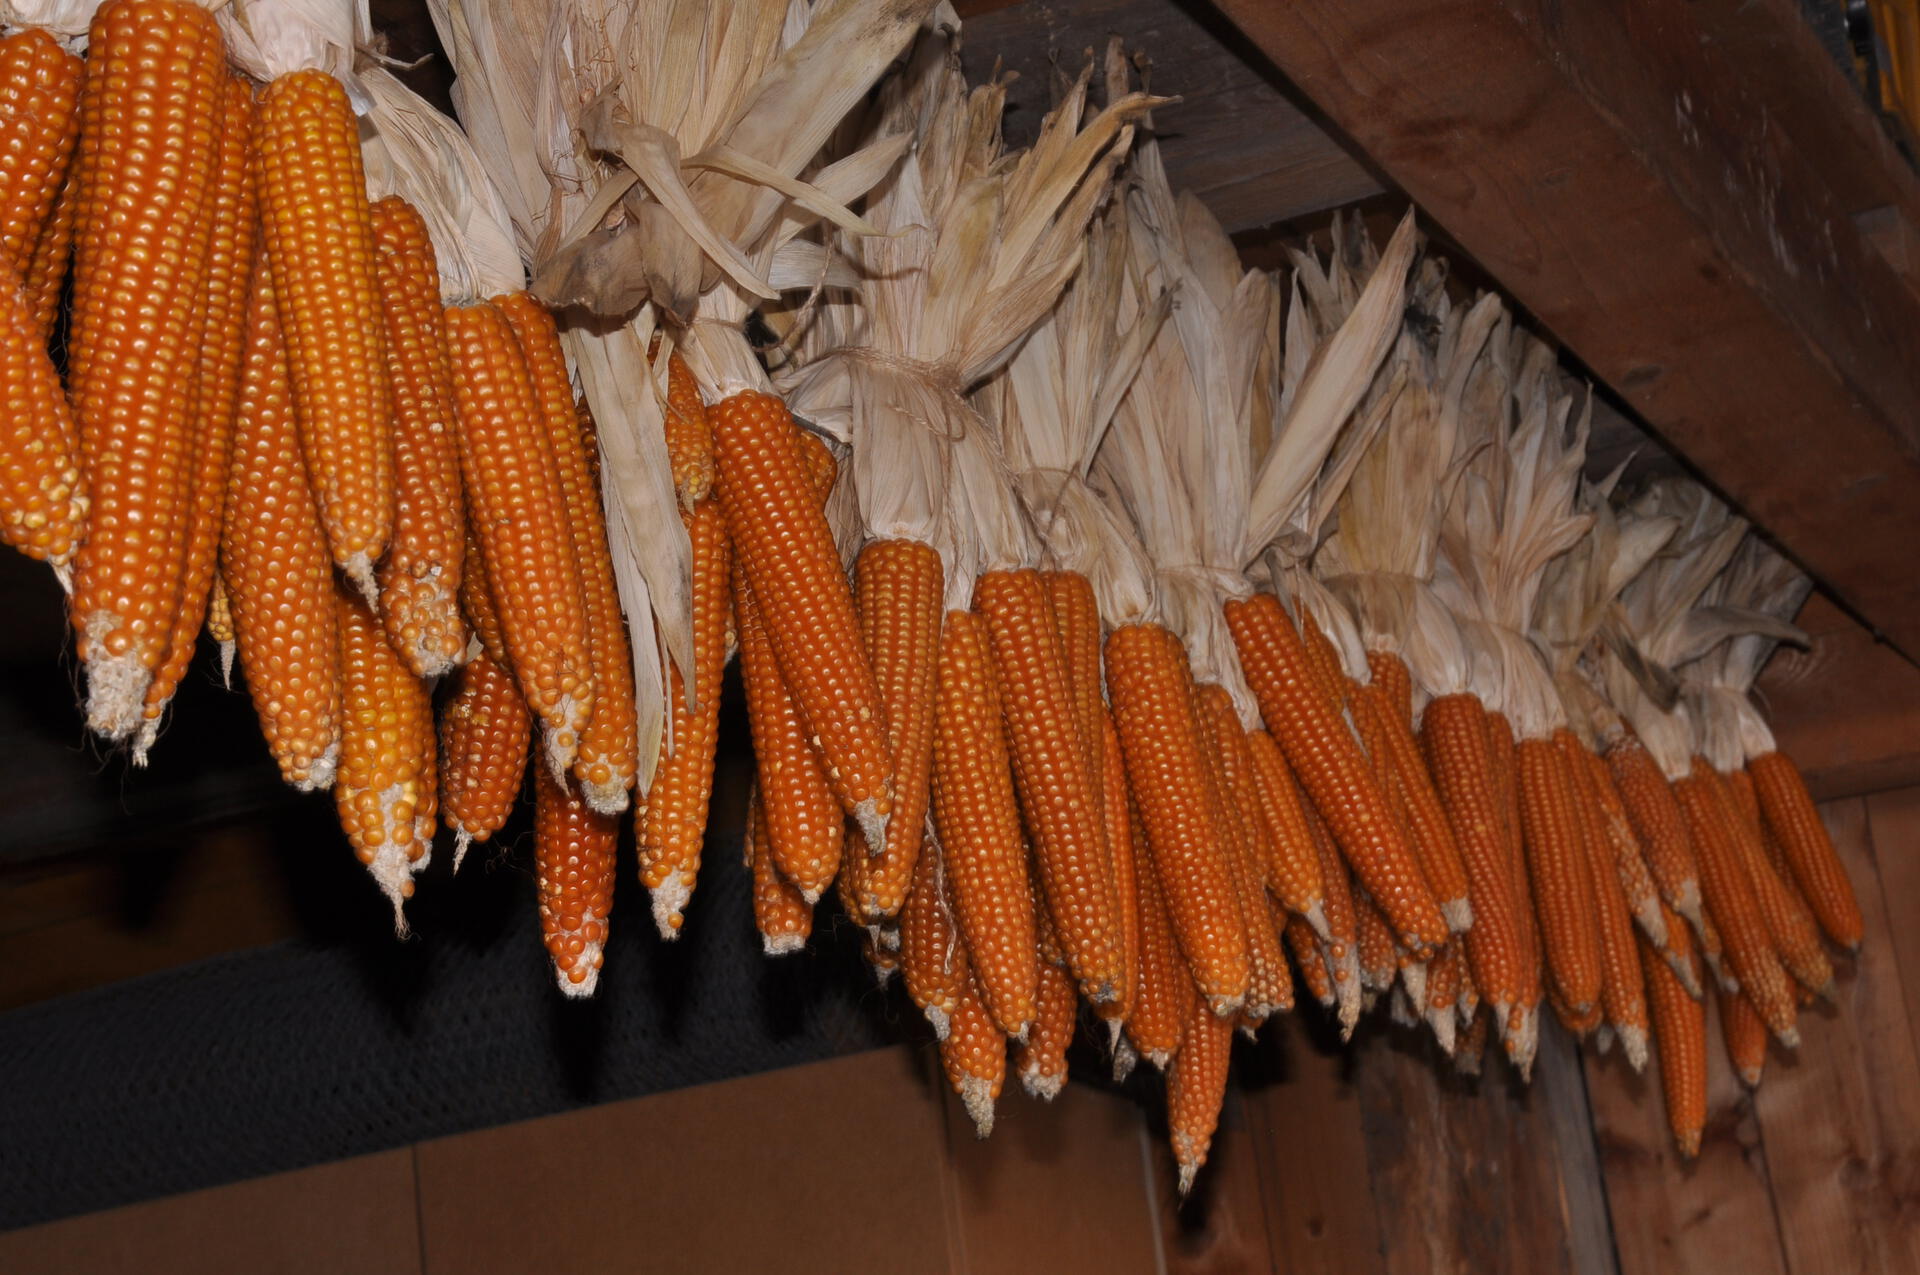 Hanging corn on the cob